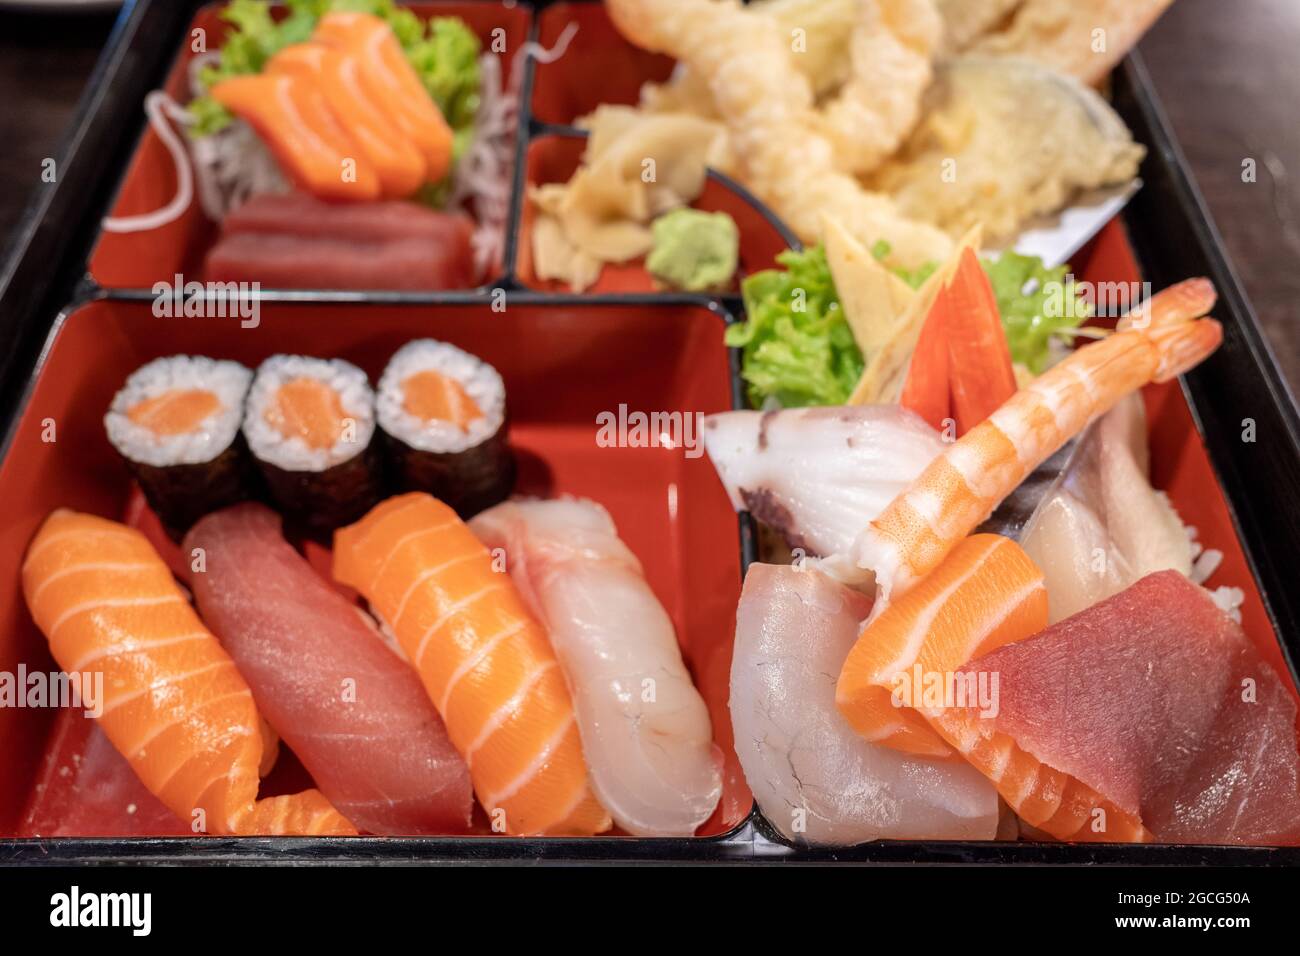 https://c8.alamy.com/comp/2GCG50A/selective-focus-and-top-view-at-sushi-bento-box-set-contain-salmon-and-tuna-nigiri-rolls-tempura-and-sashimi-2GCG50A.jpg